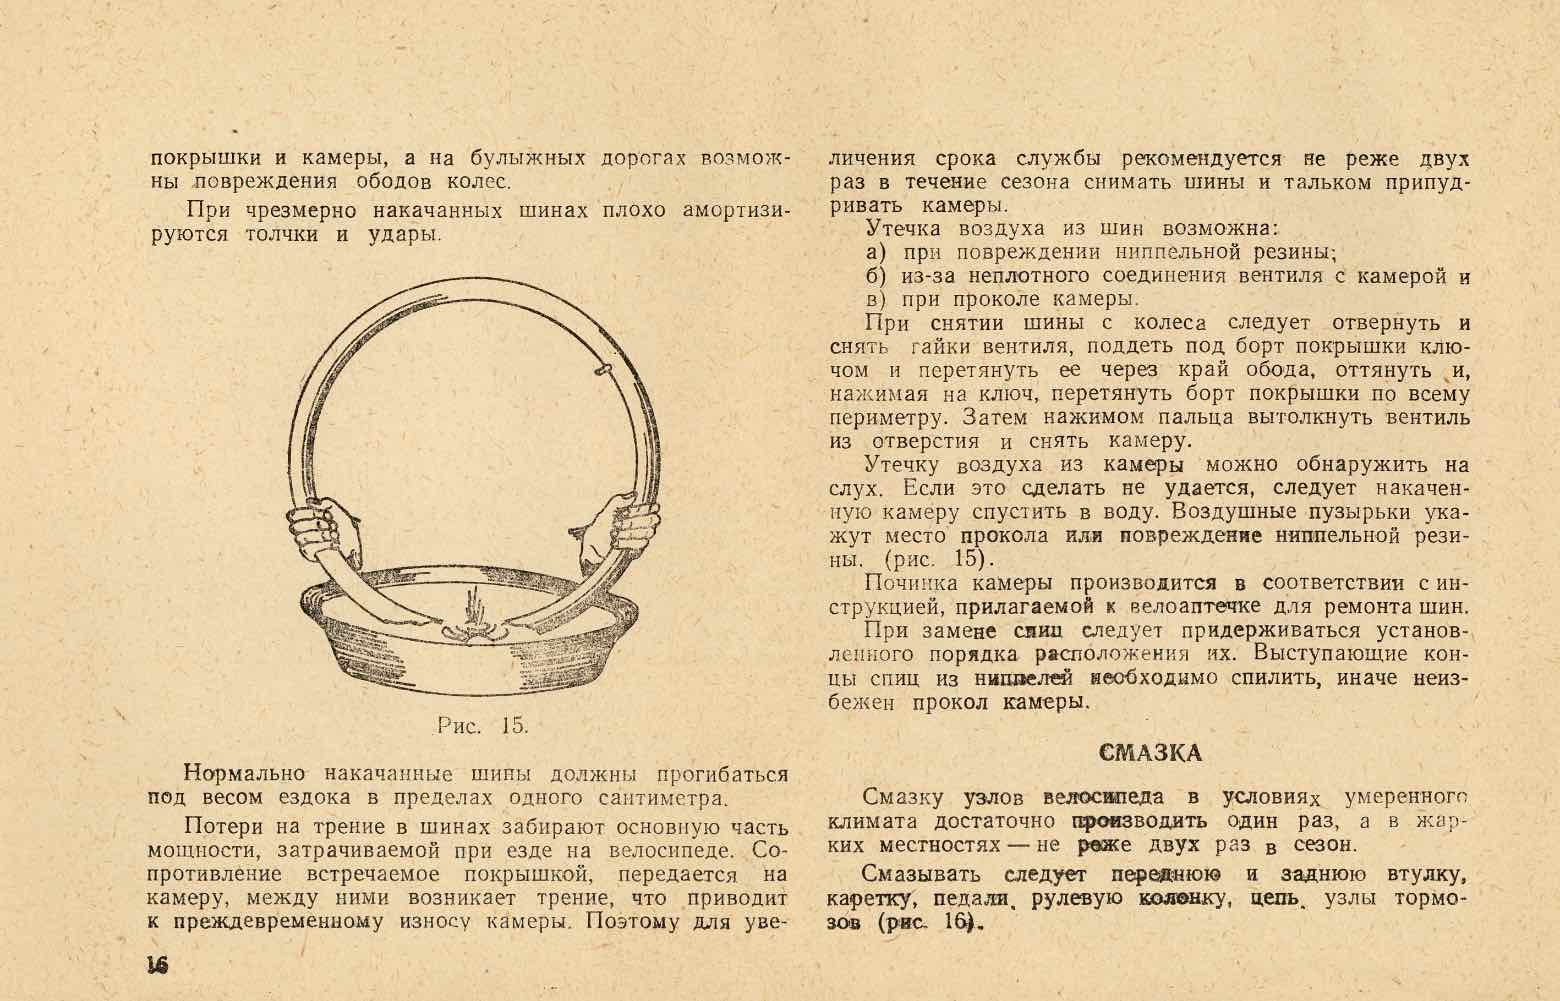 Kharkov - instructions for B130K & B134 - page 16 main image